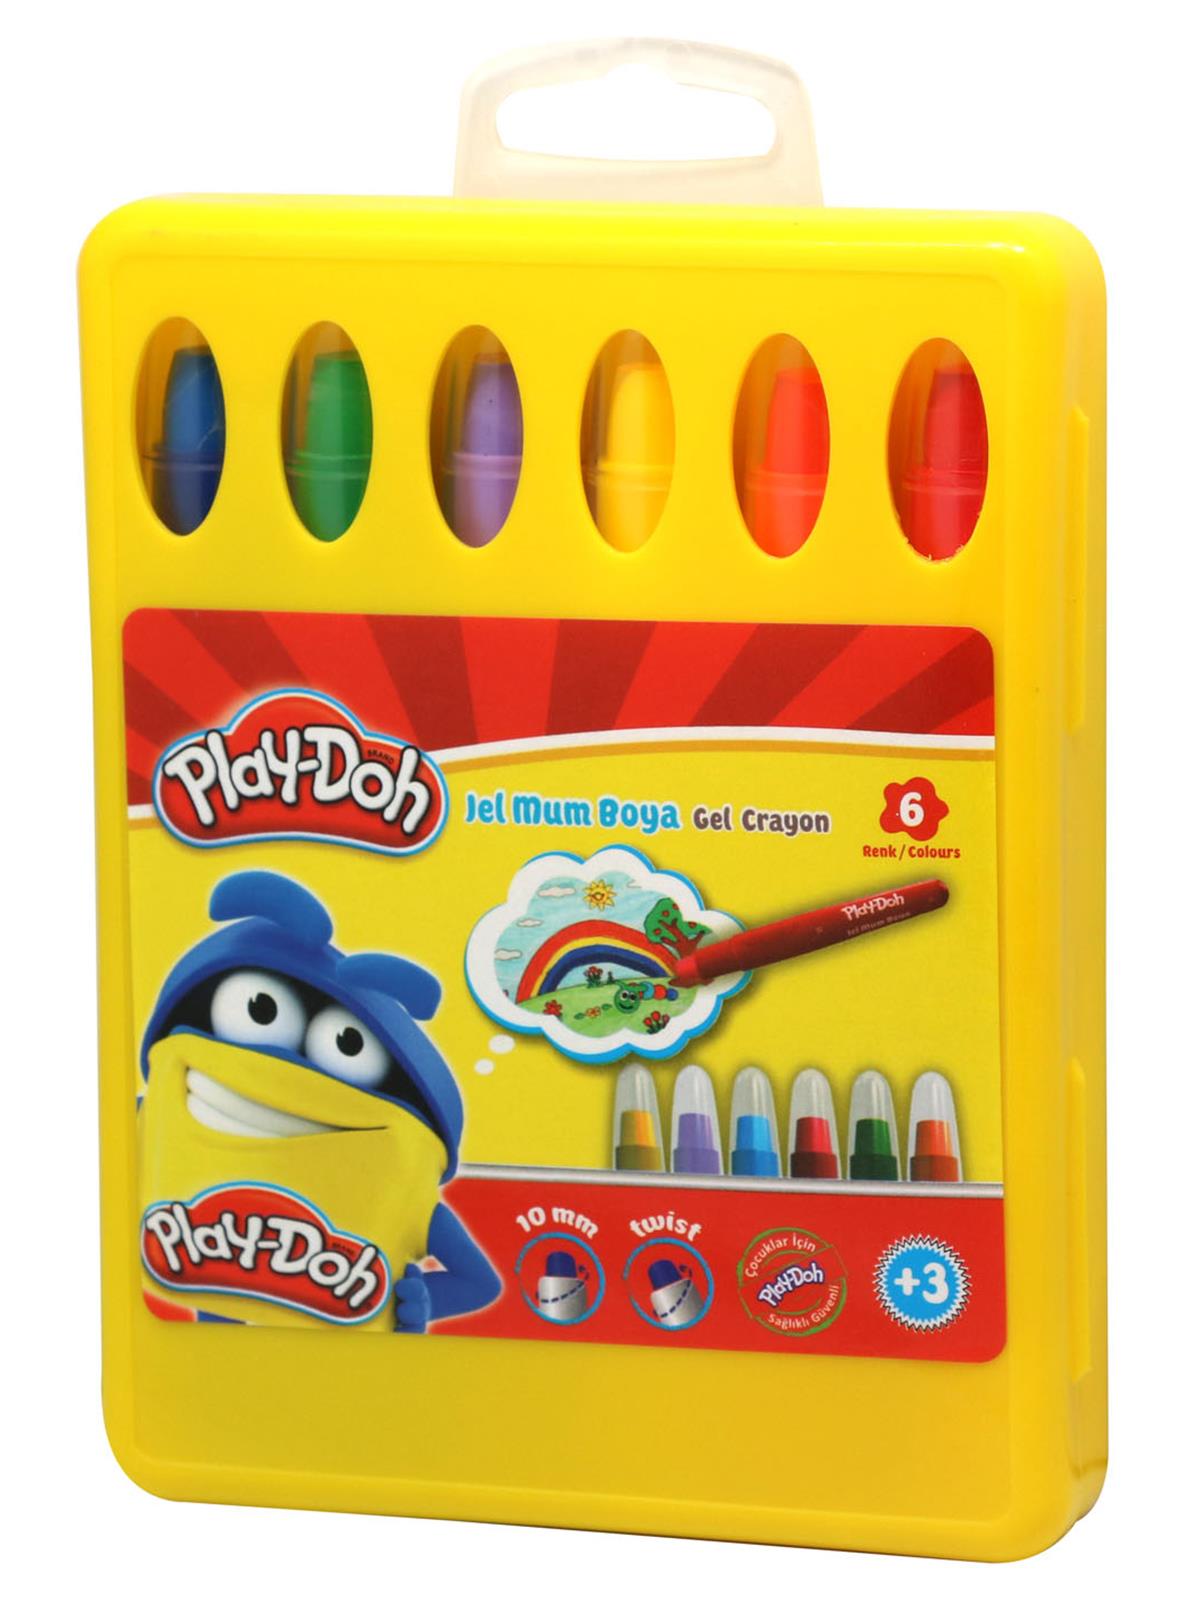 Play-Doh Crayon Jel Mum Boya 6 Renk